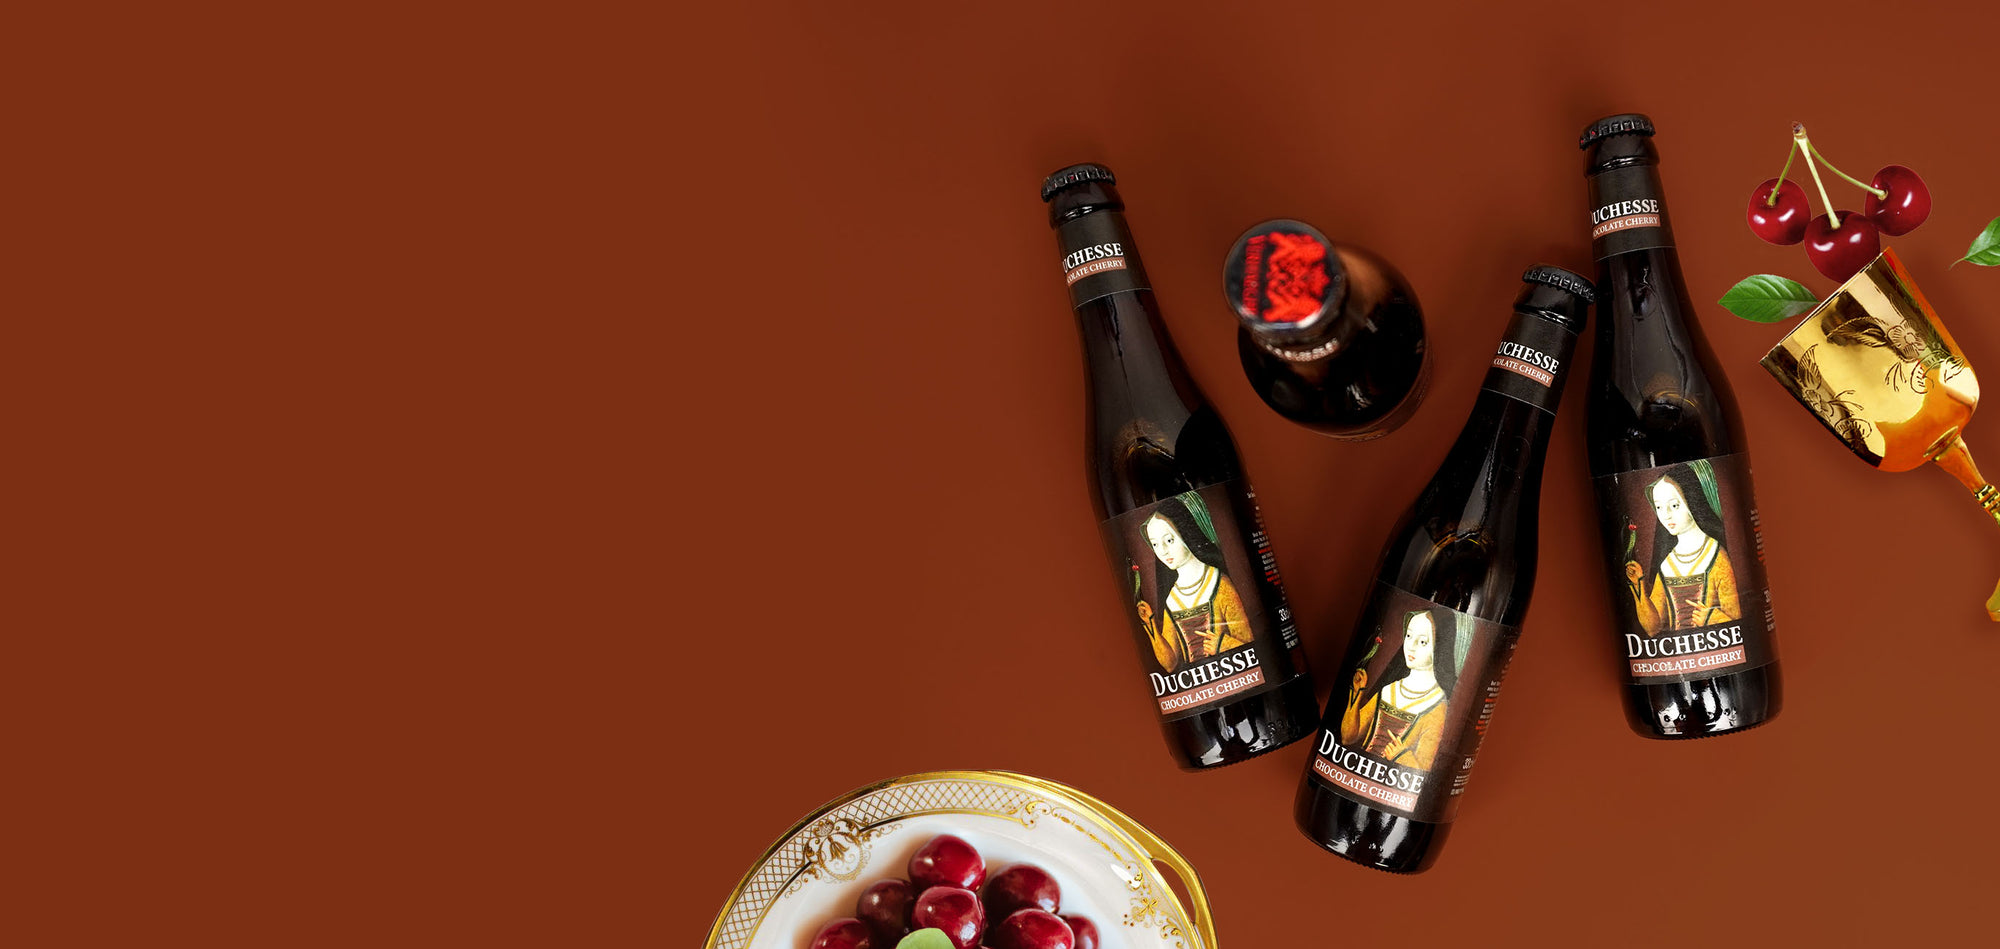 Duchesse De Bourgogne Chocolate & Cherry Flanders Red Ale